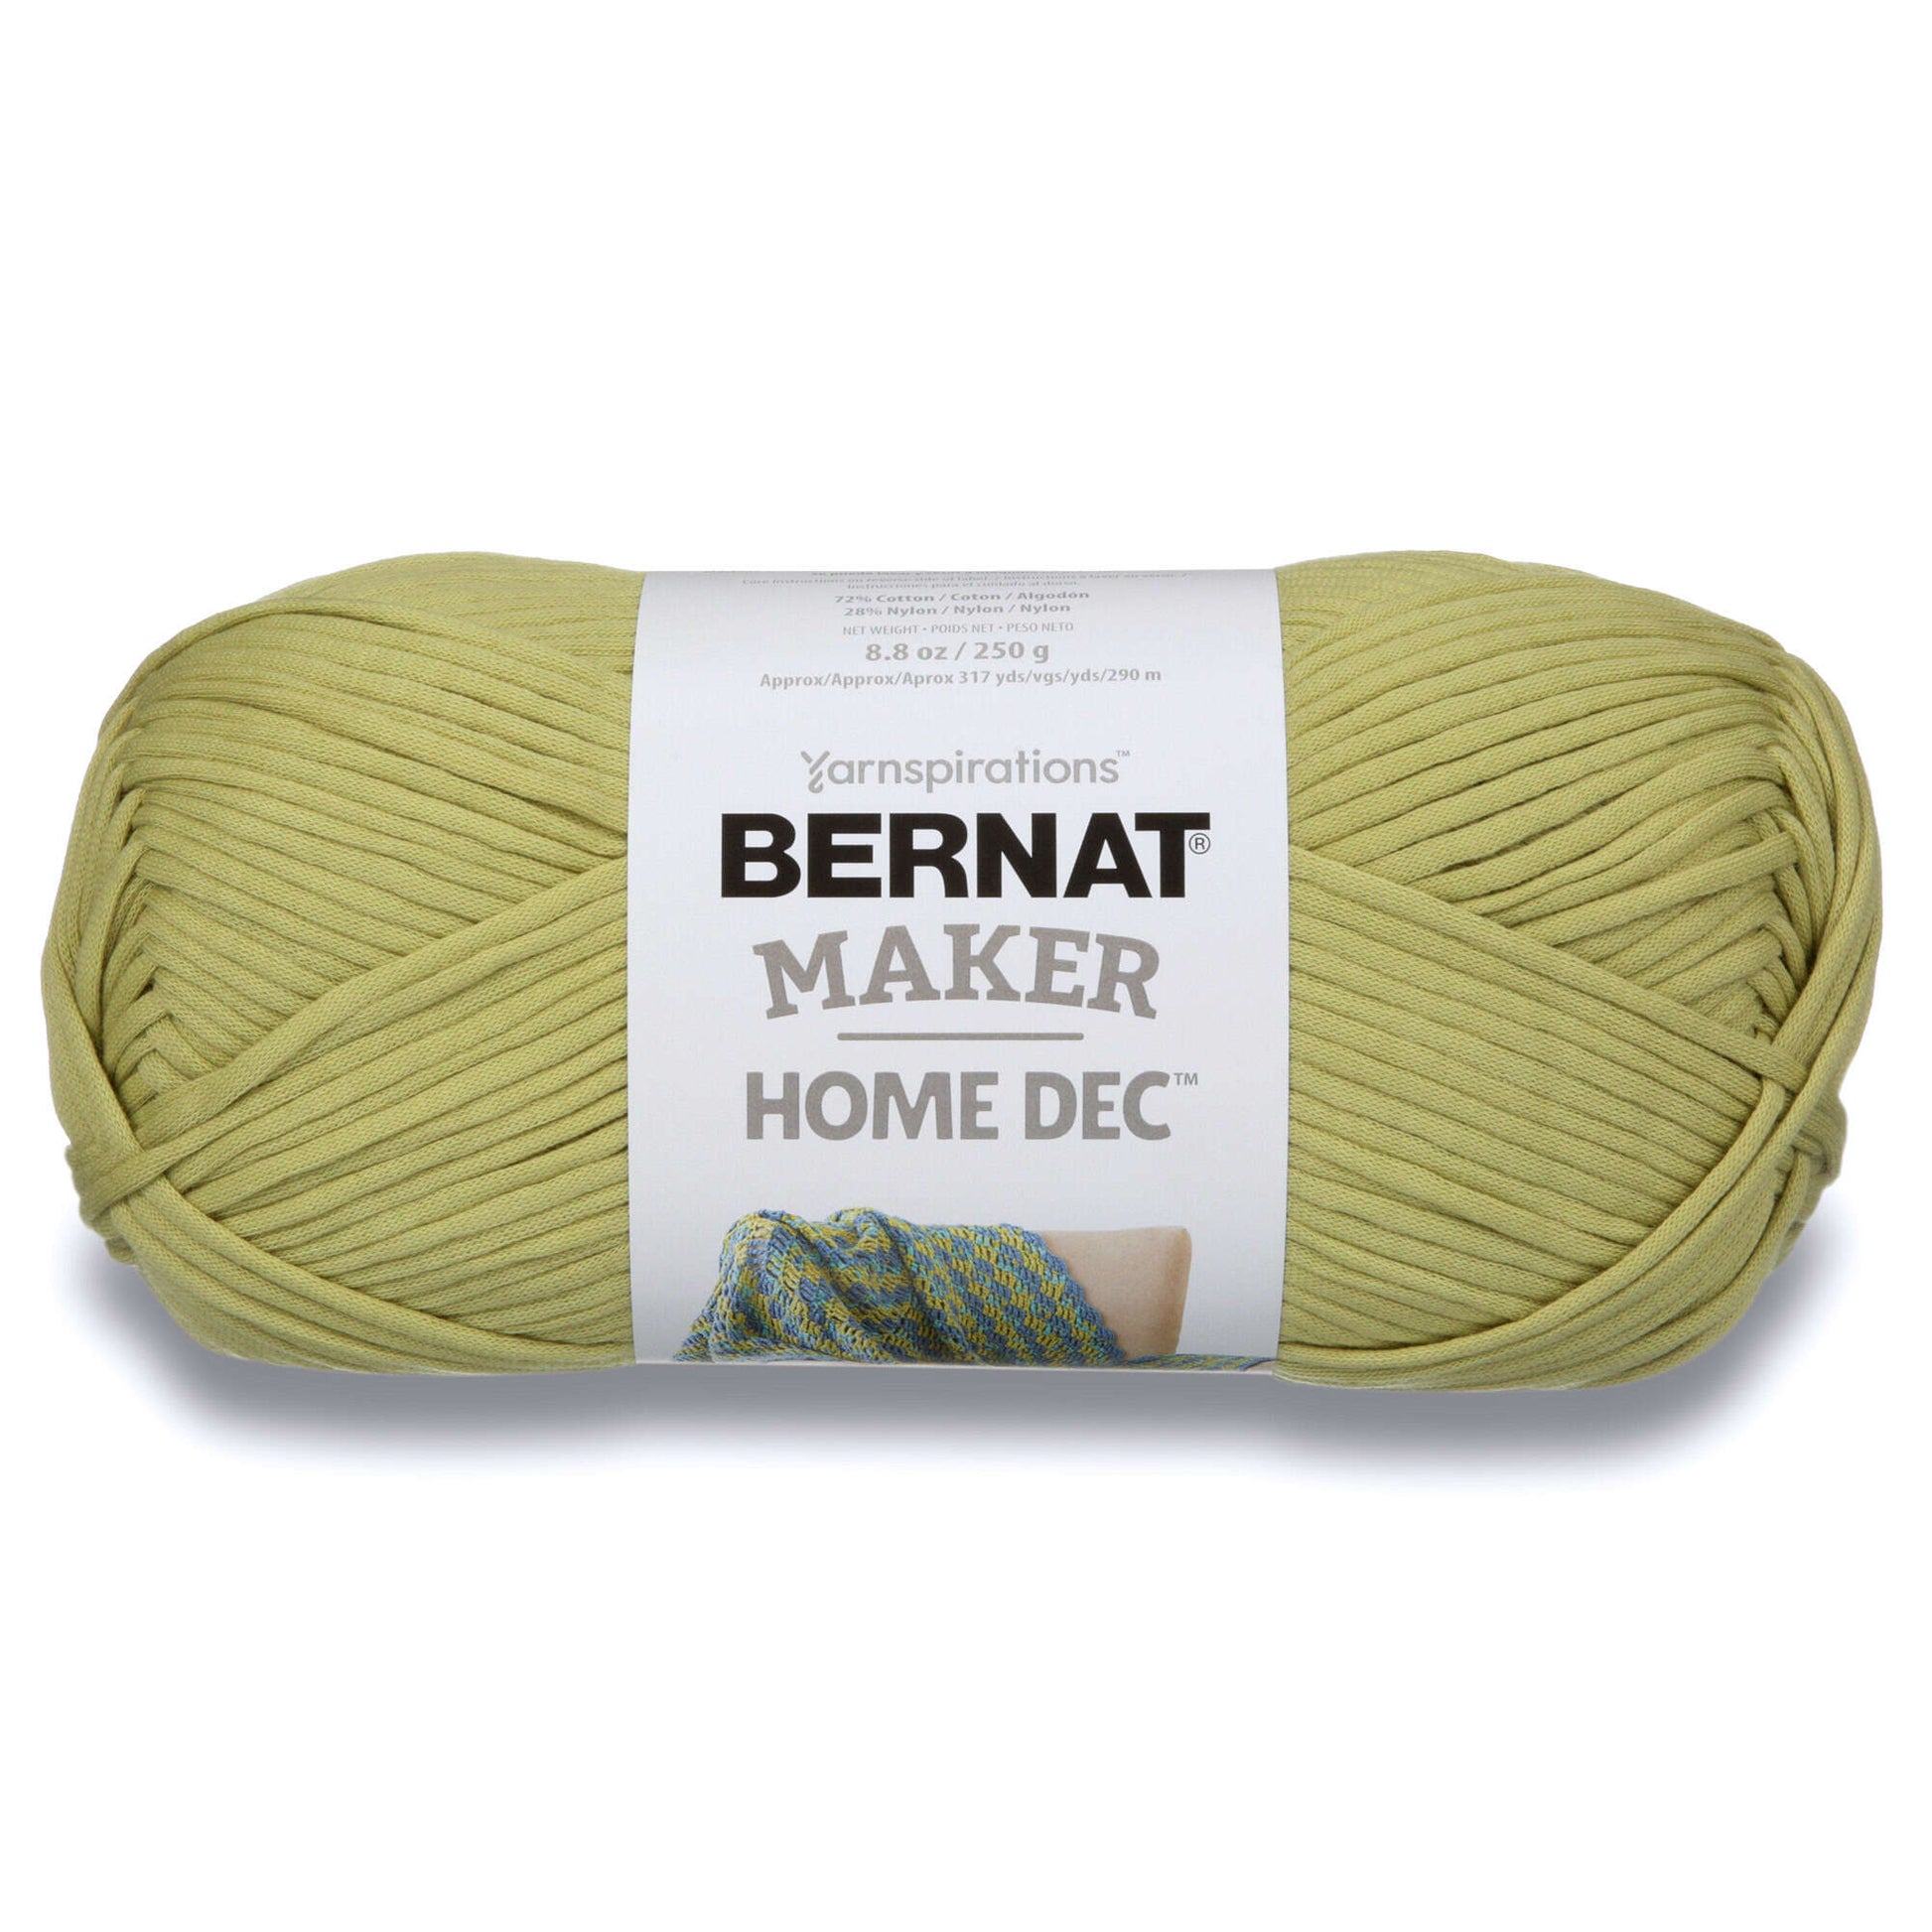 Bernat Maker Home Dec Yarn | Yarnspirations